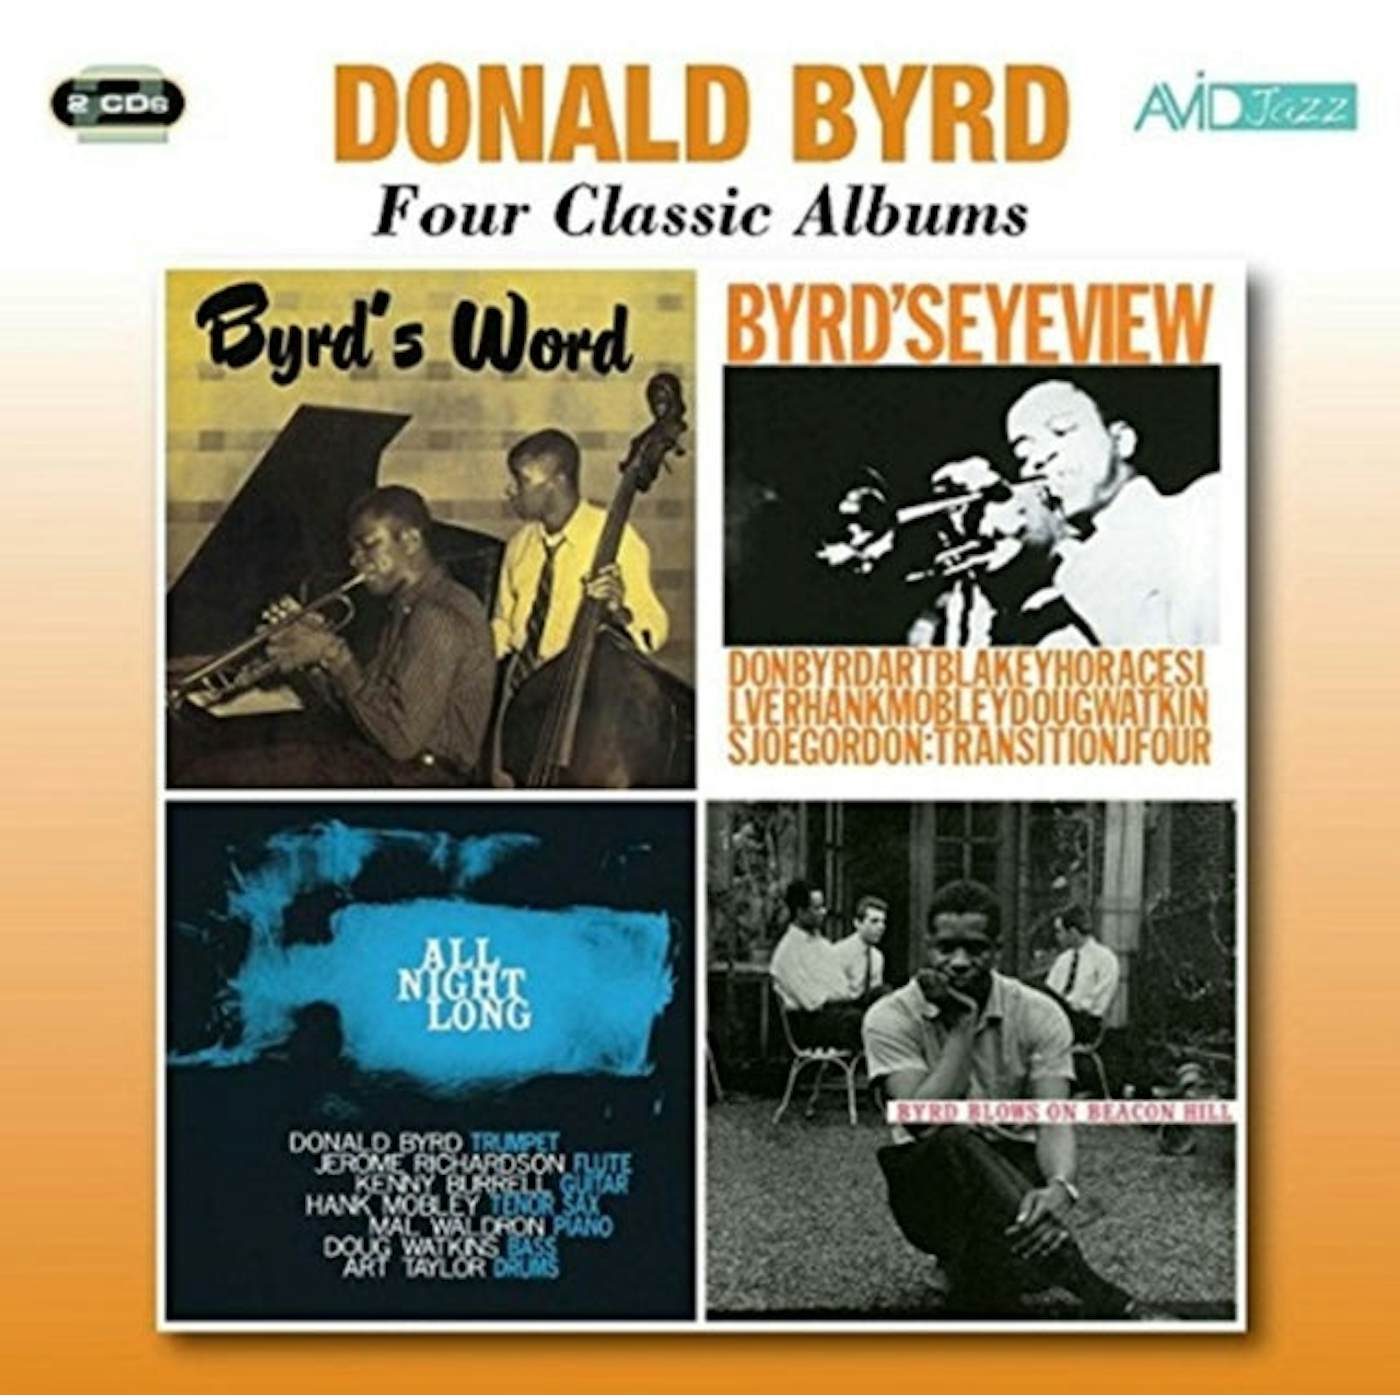 Donald Byrd CD - Four Classic Albums (Byrd's Word / Byrd's Eye View / All Night Long / Byrd Blows On Beacon Hill)